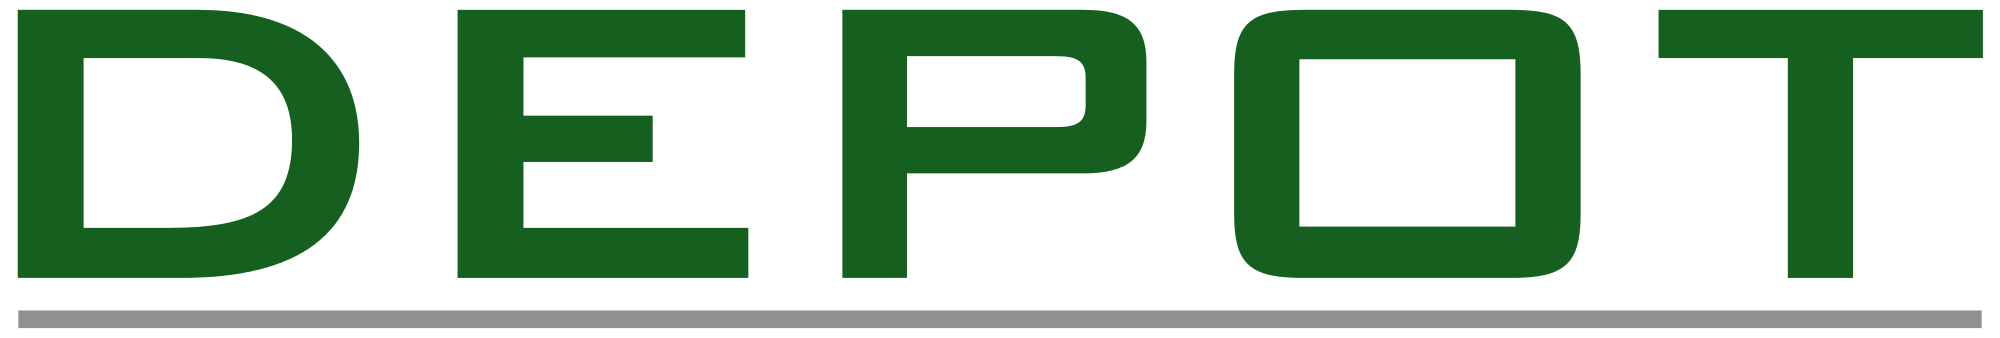 depot logo